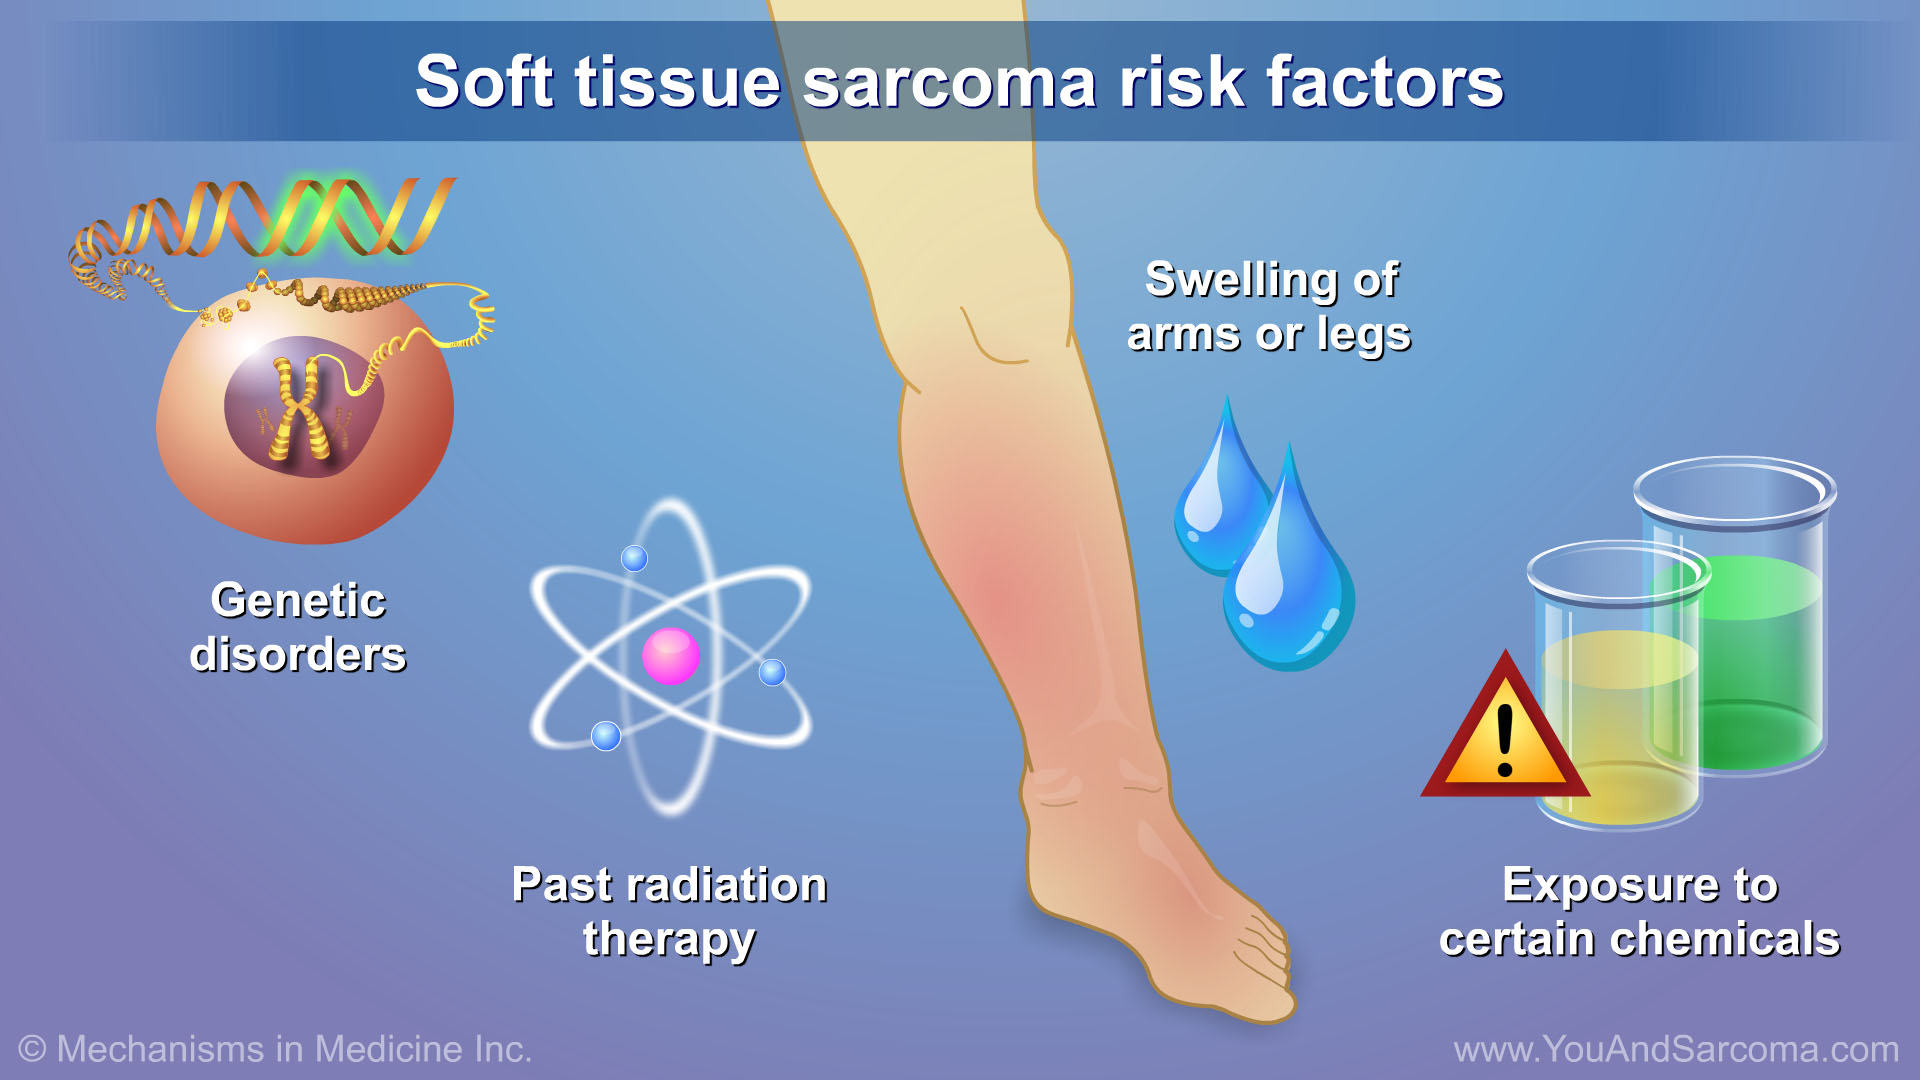 Diagnosing And Treating Soft Tissue Sarcoma